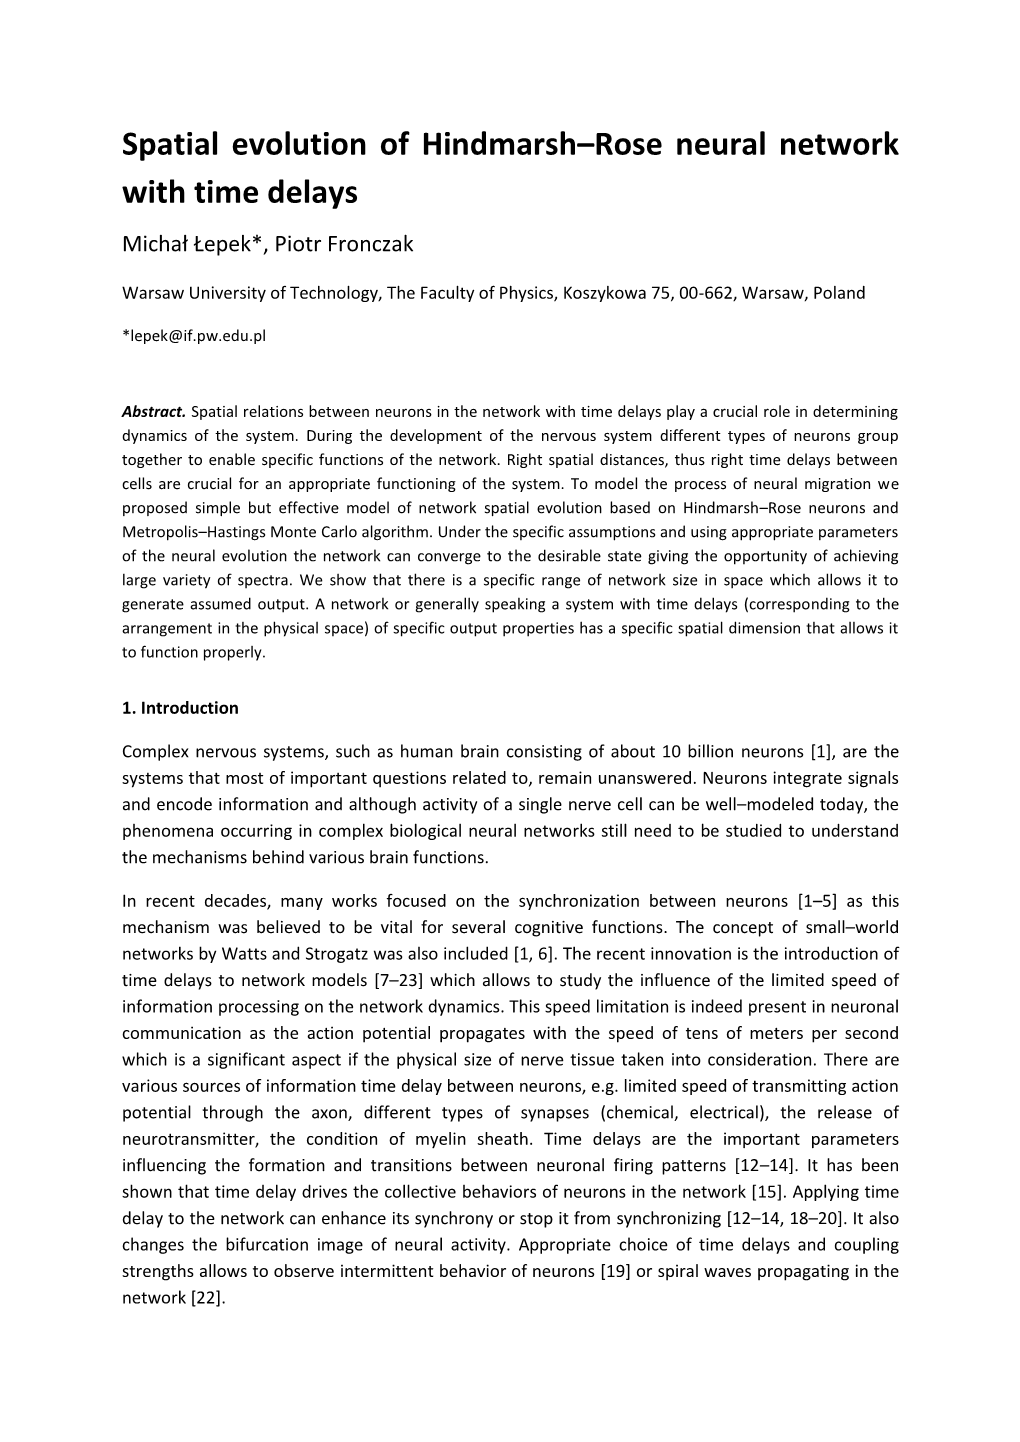 Spatial Evolution of Hindmarsh–Rose Neural Network with Time Delays Michał Łepek*, Piotr Fronczak